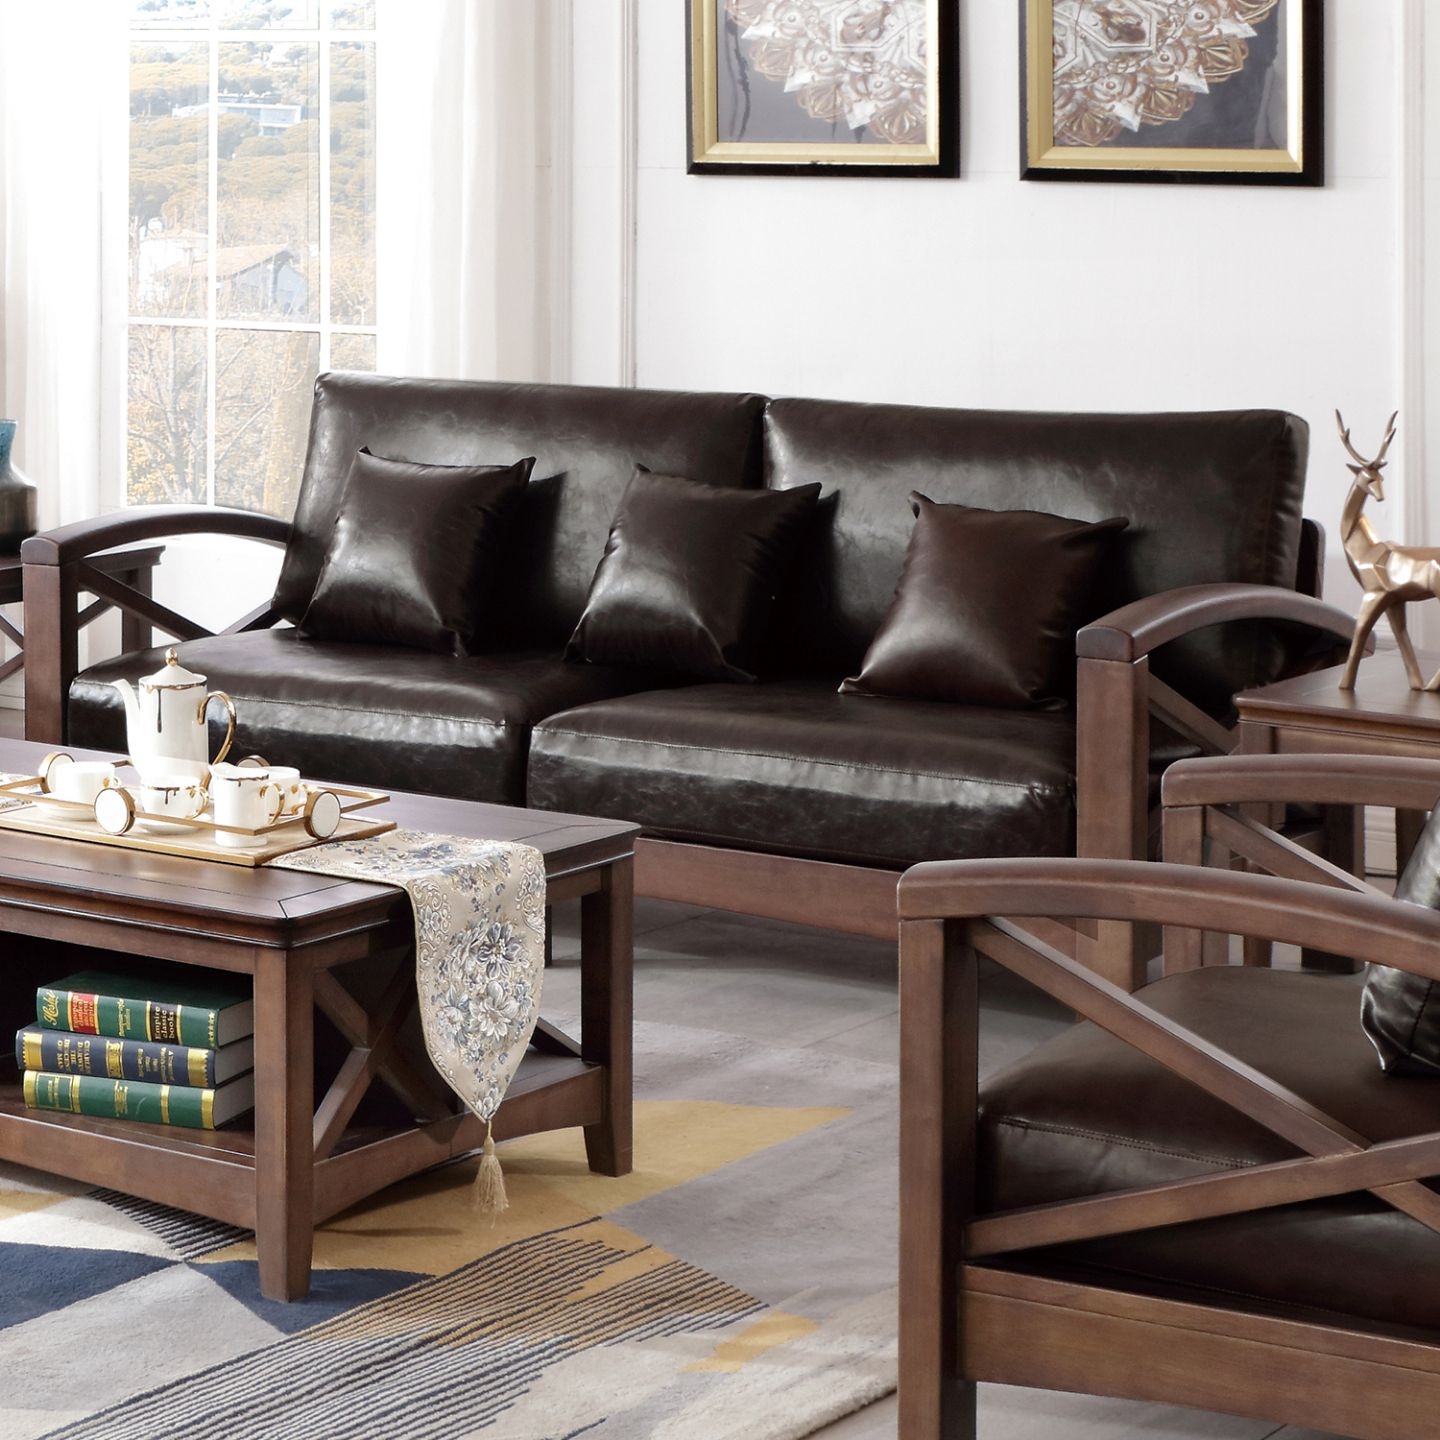 x系列 简美风格 客厅1 2 3组合超纤皮沙发实木家具